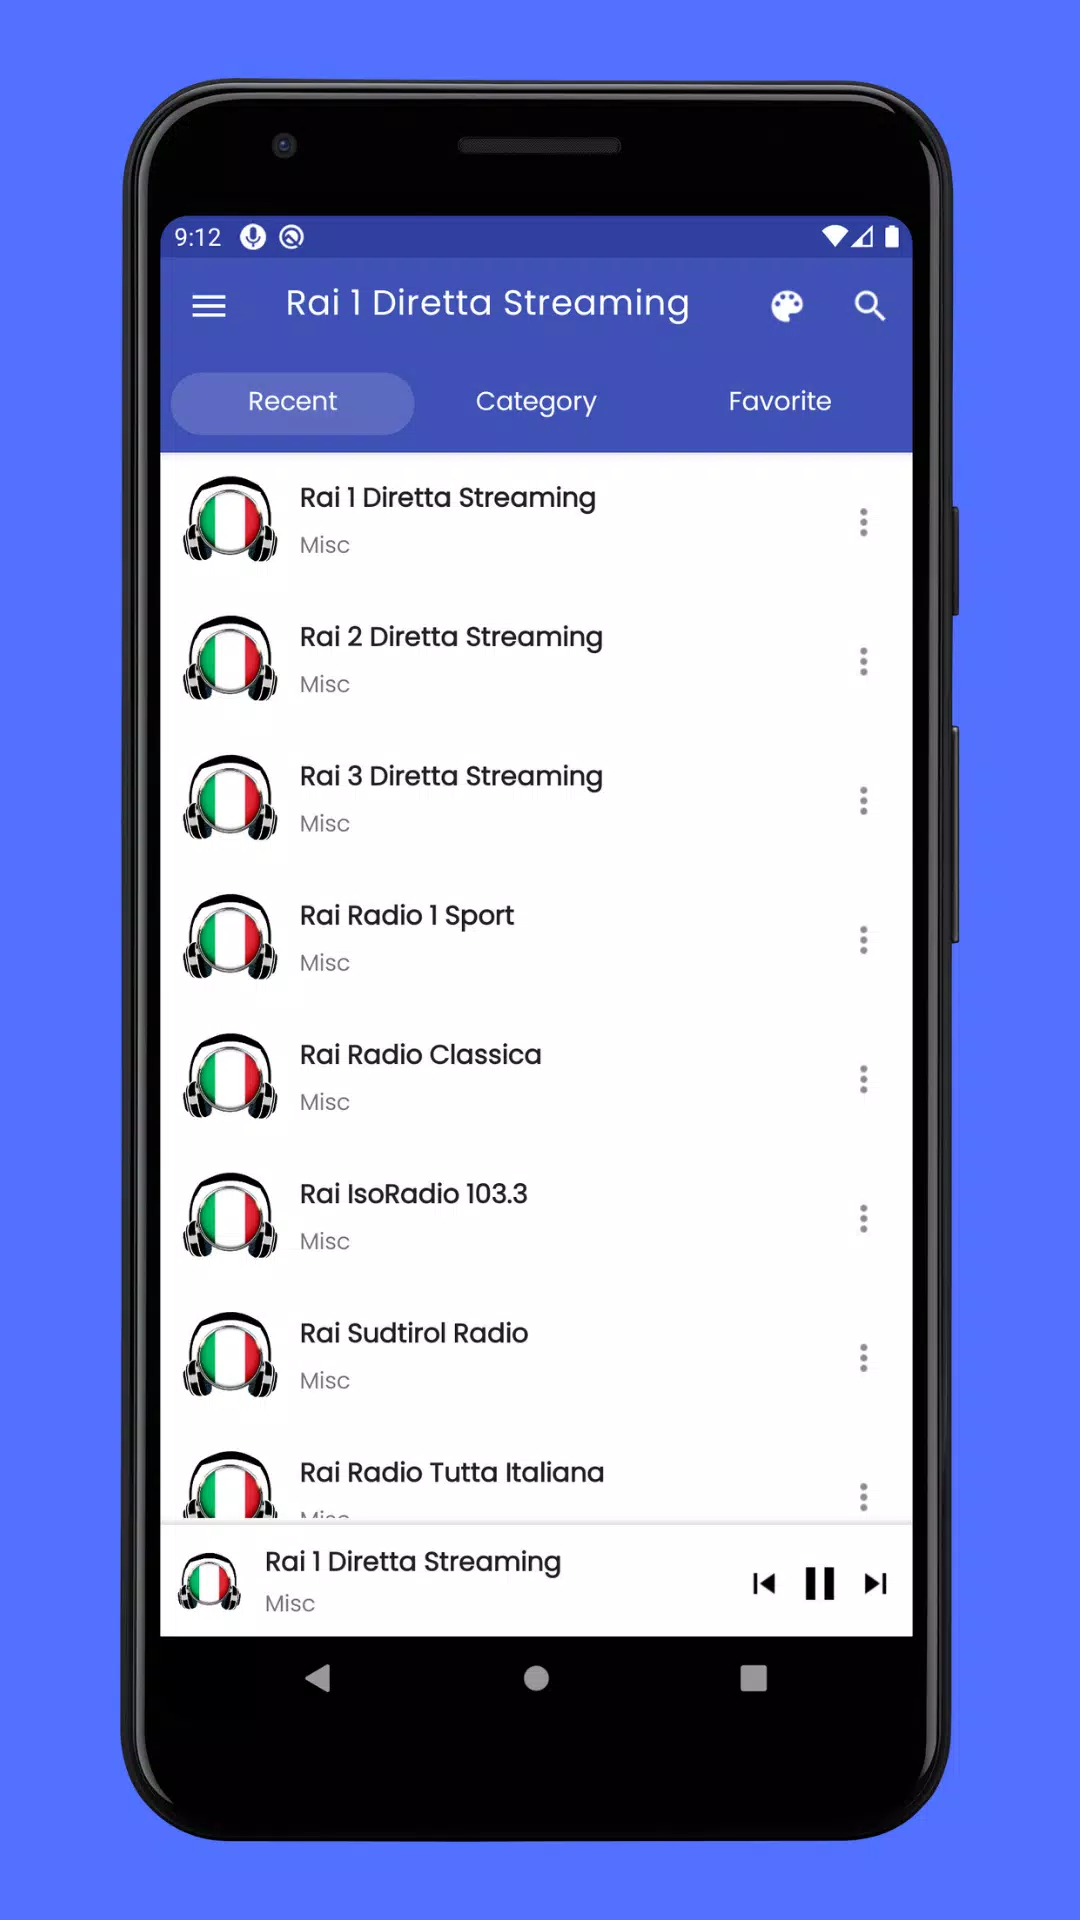 Rai 1 Diretta Streaming for Android - APK Download